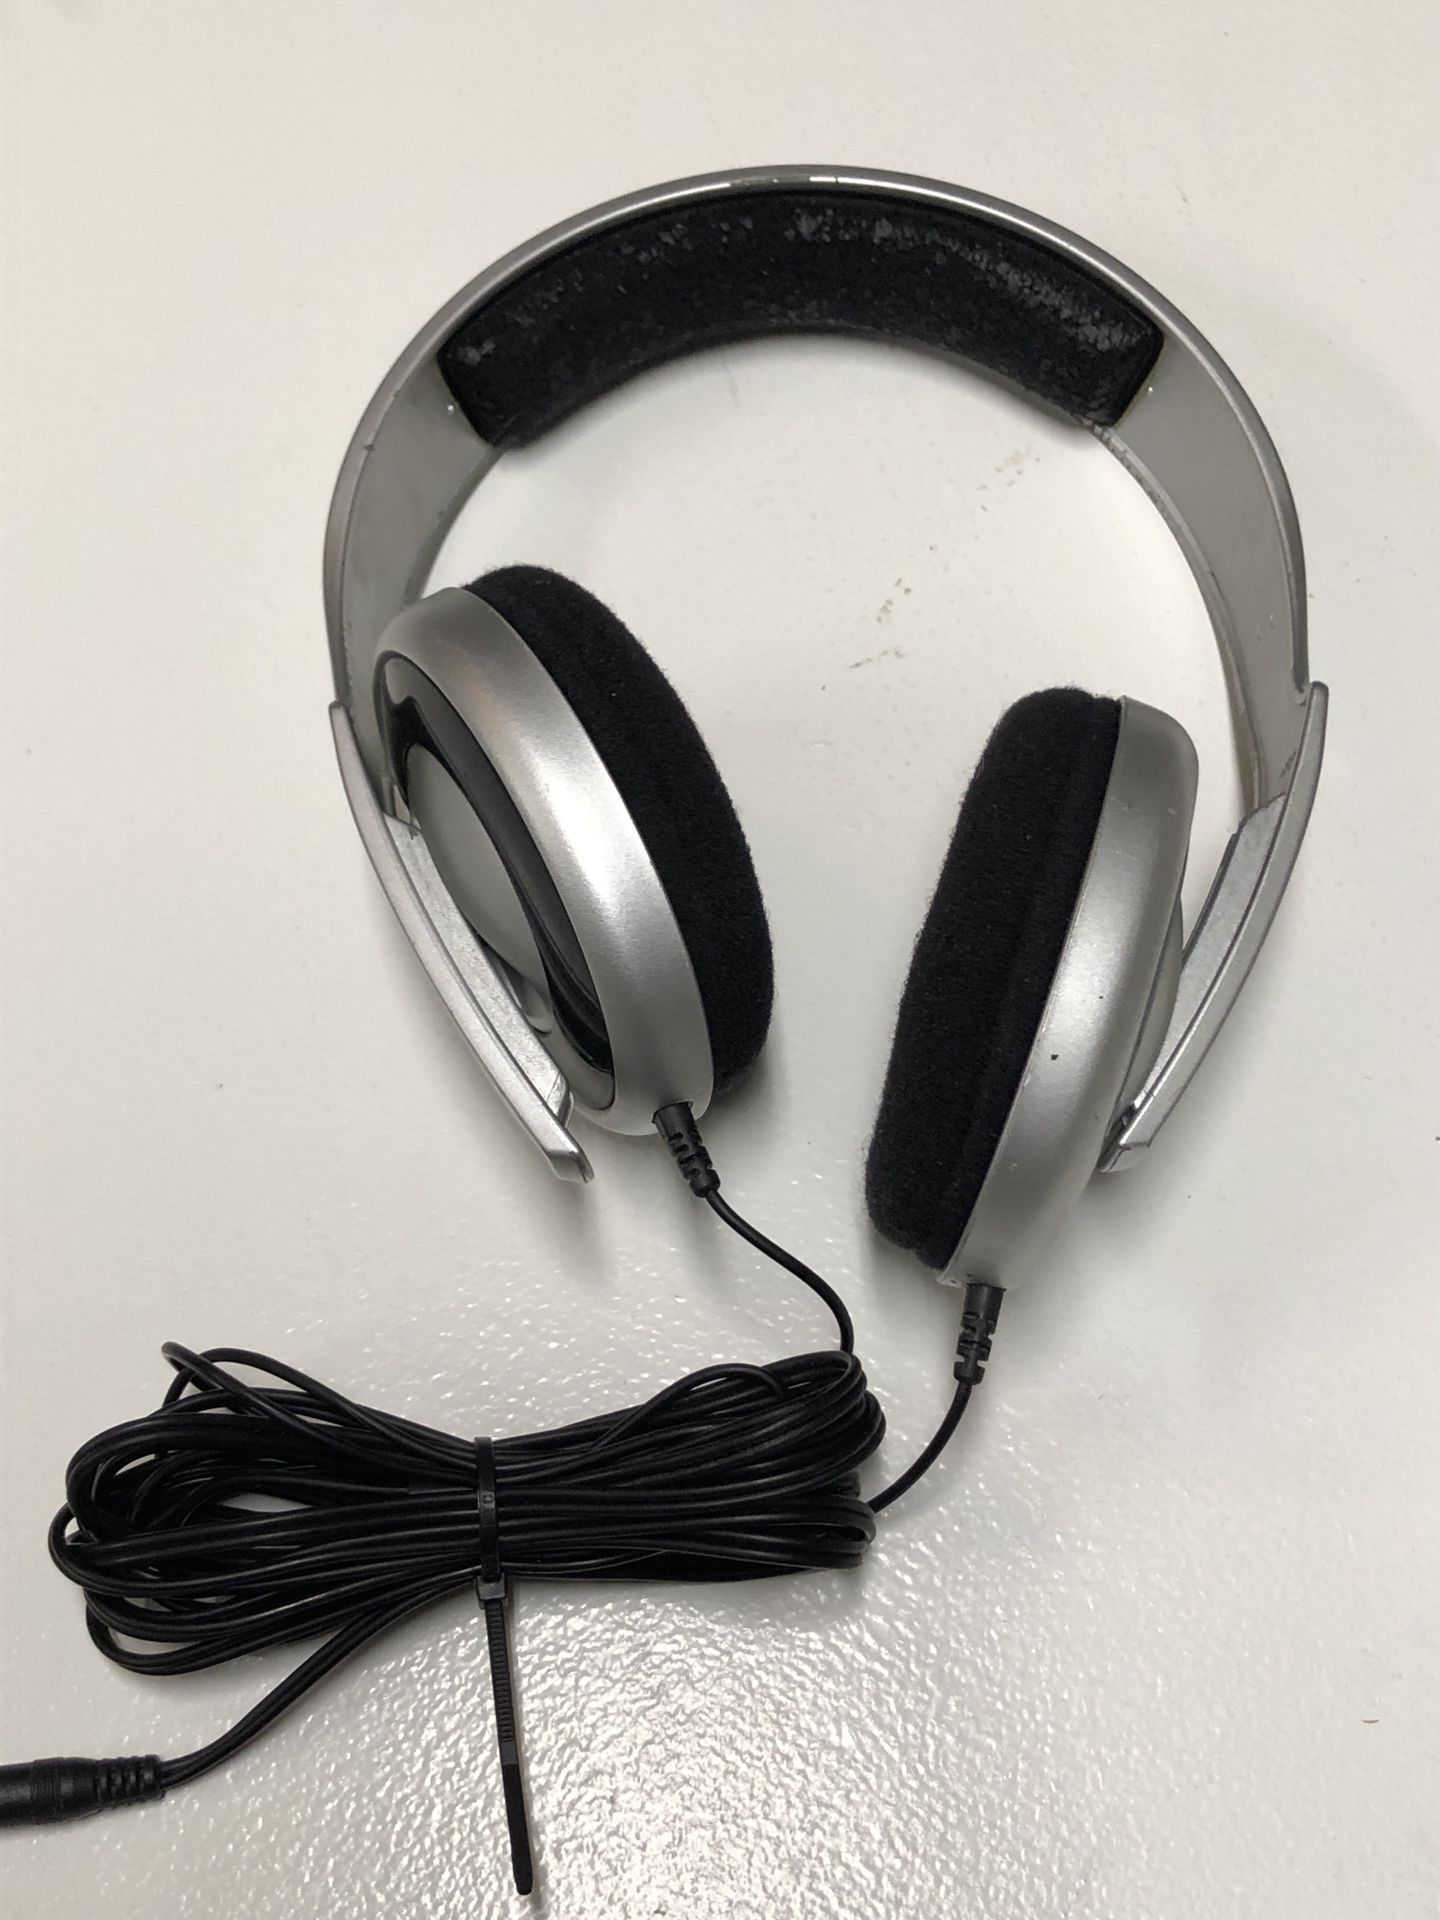 Sennheiser Pro Audio Headphones HD212 Pro. MSRP $100